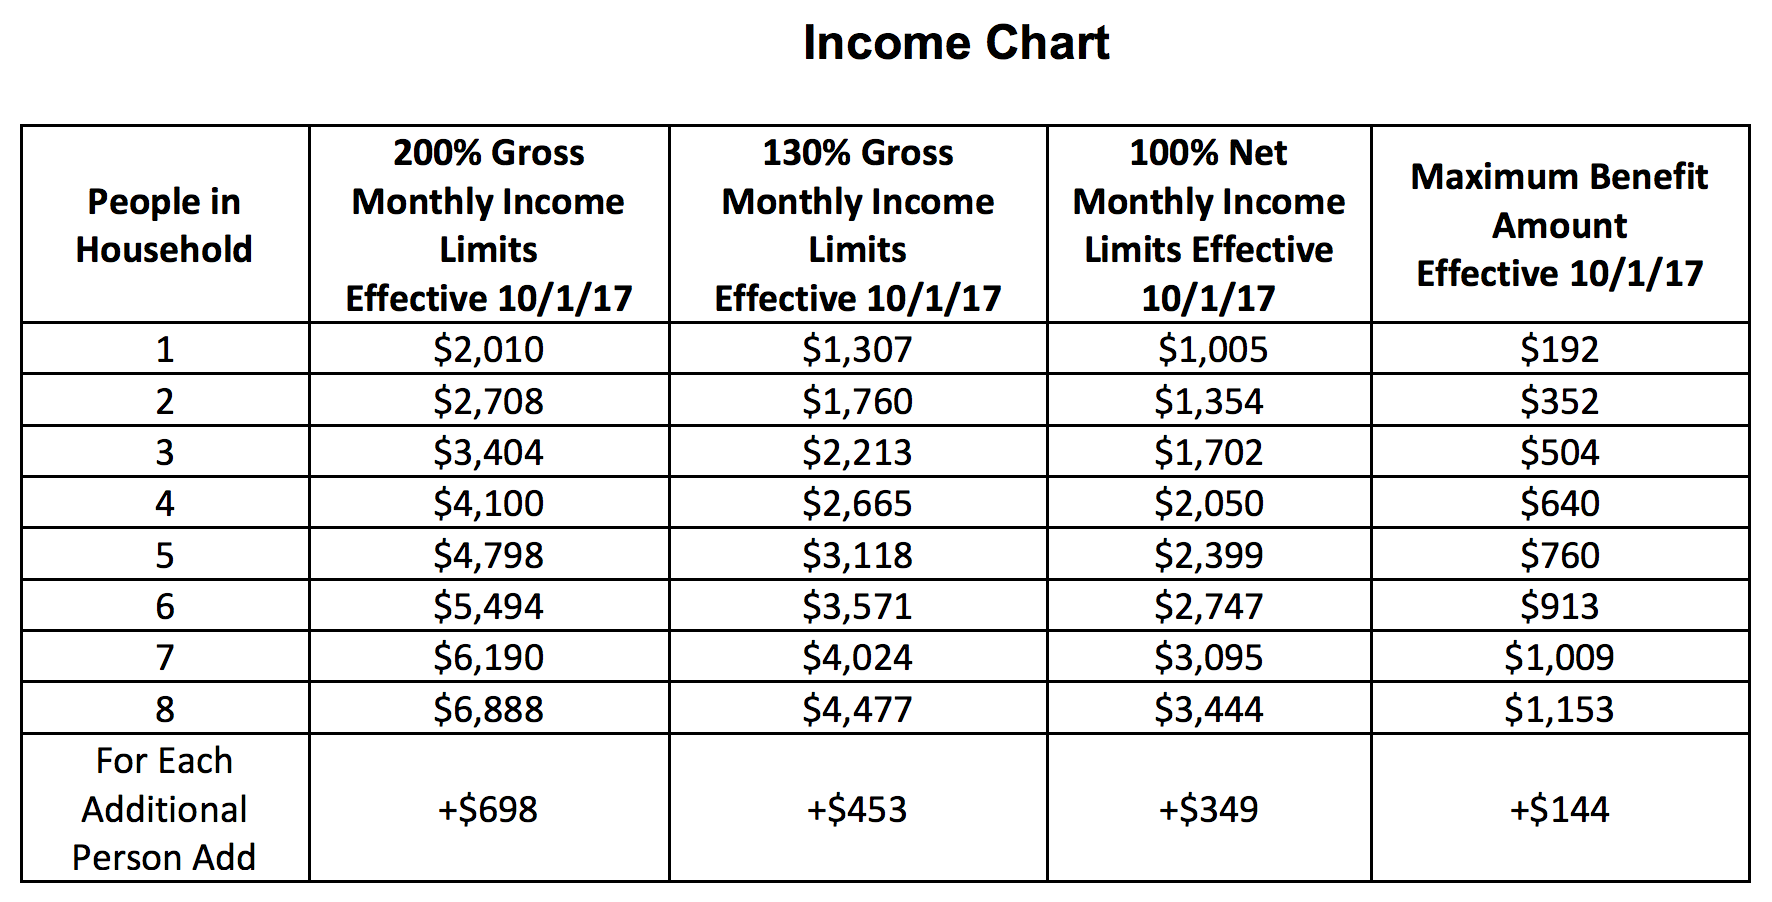 Louisiana Snap Income Chart